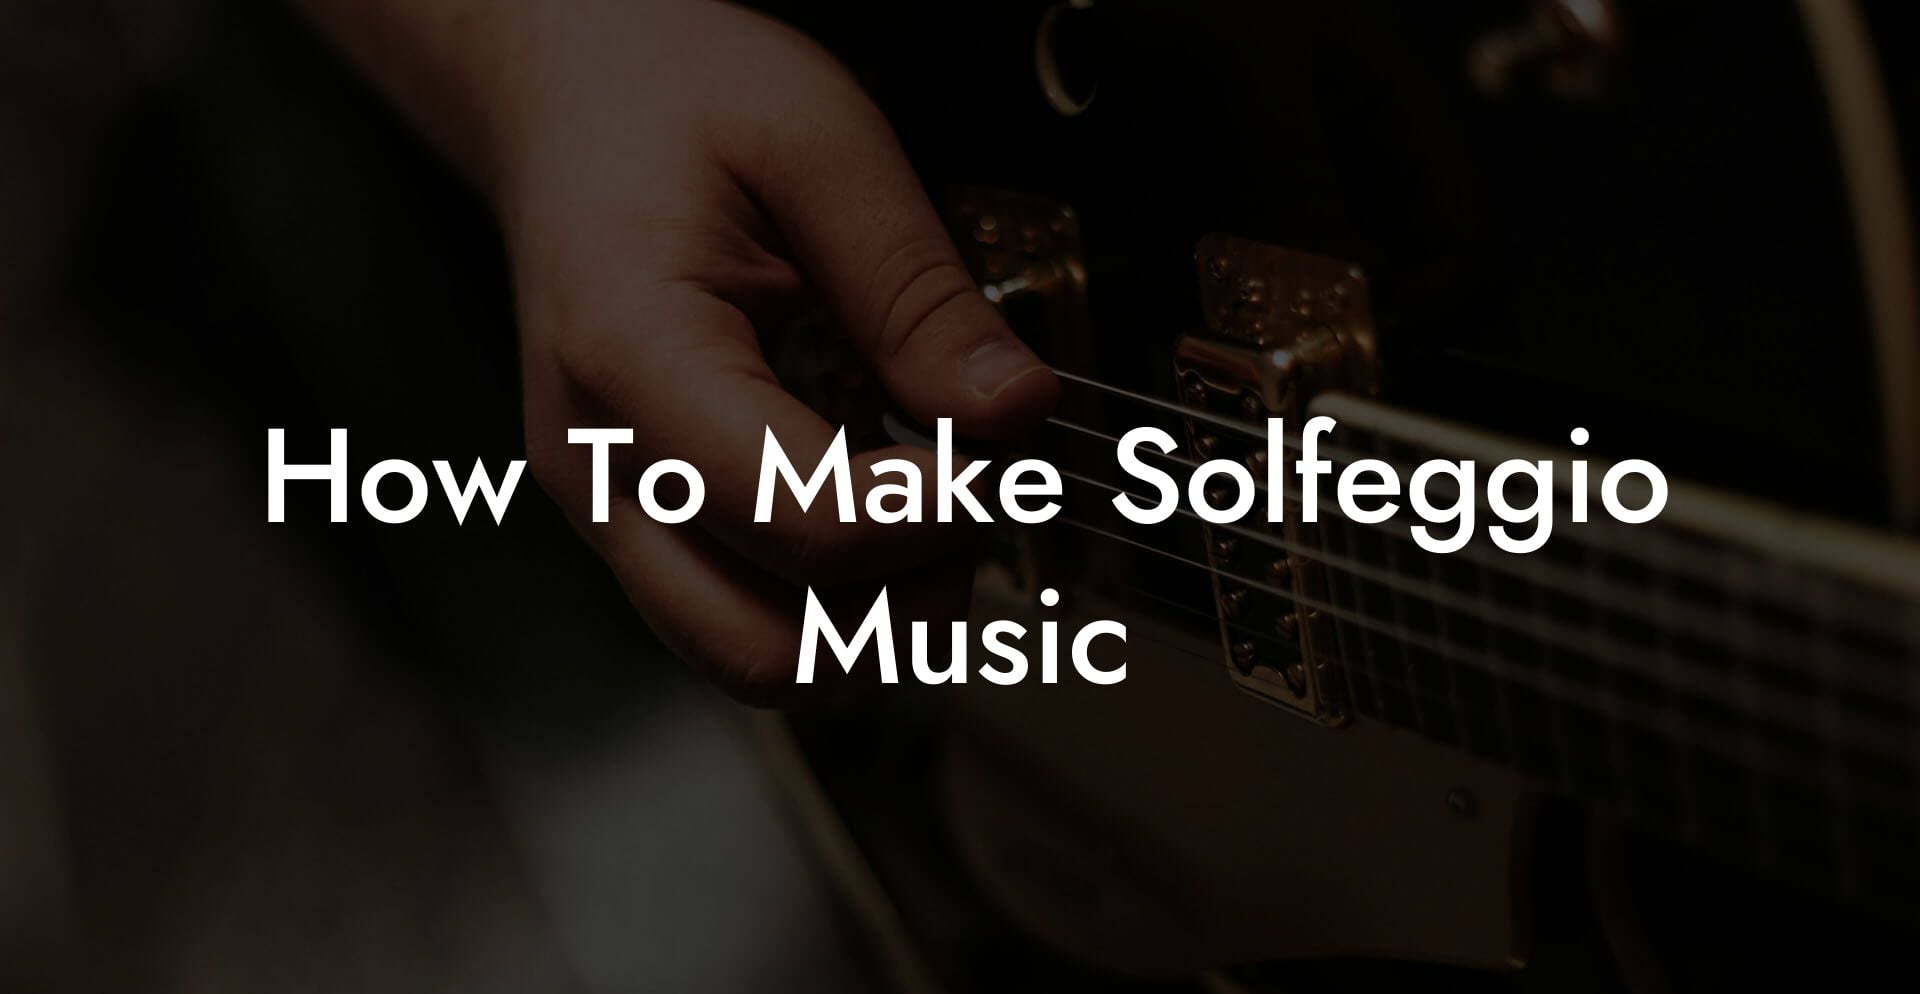 how to make solfeggio music lyric assistant